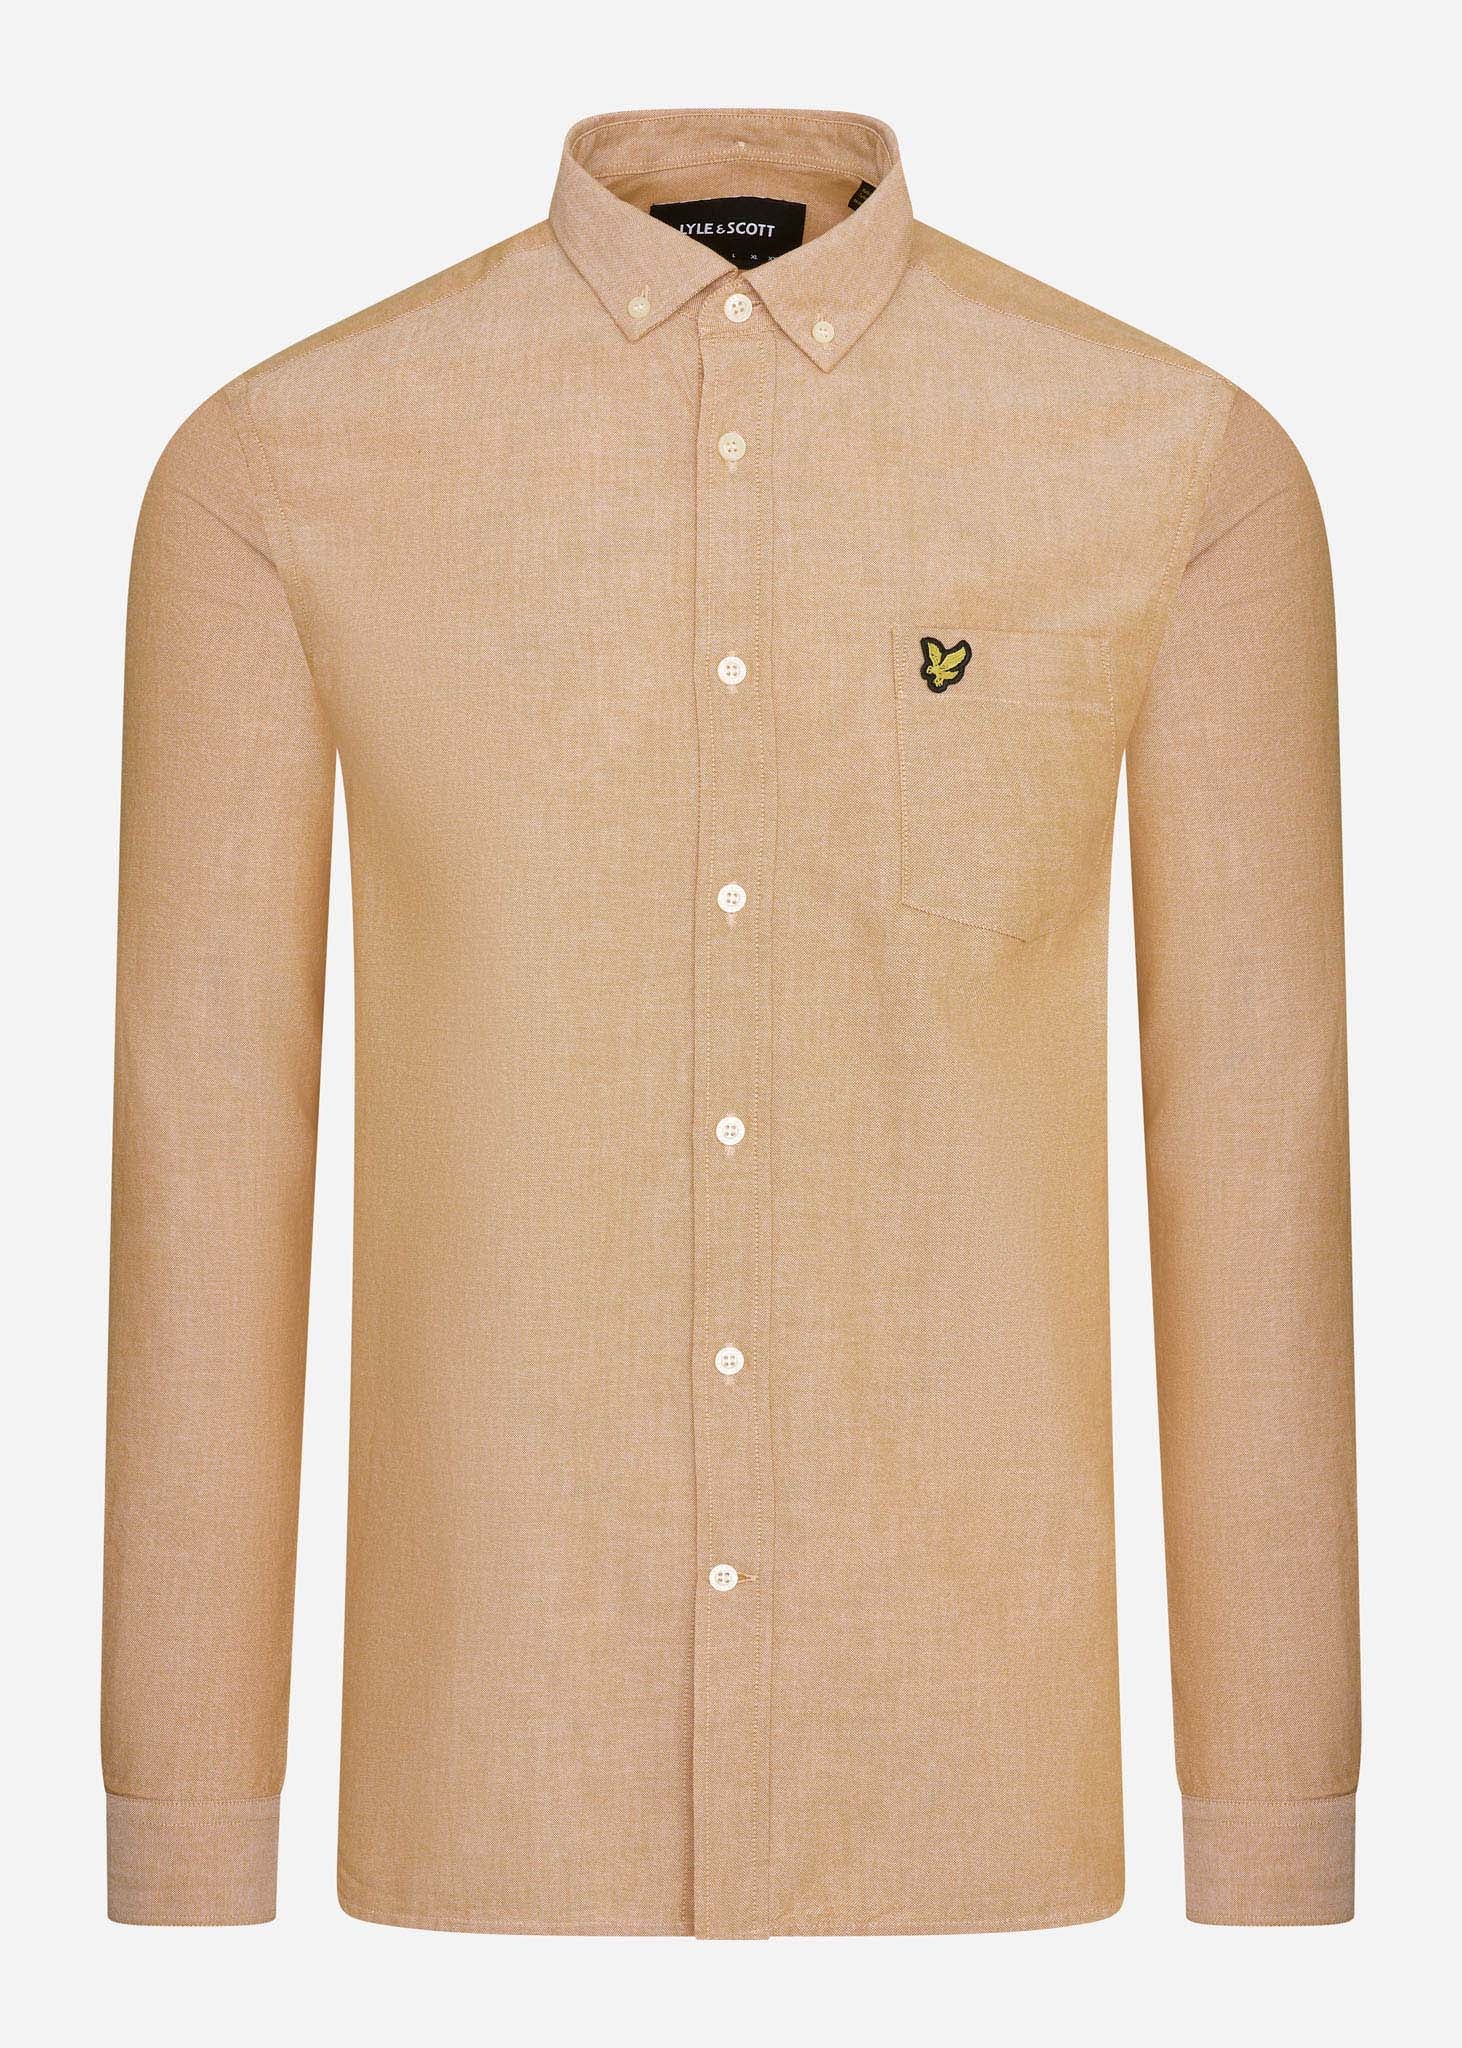 Lyle & Scott Overhemden  Oxford shirt - sunflower white 